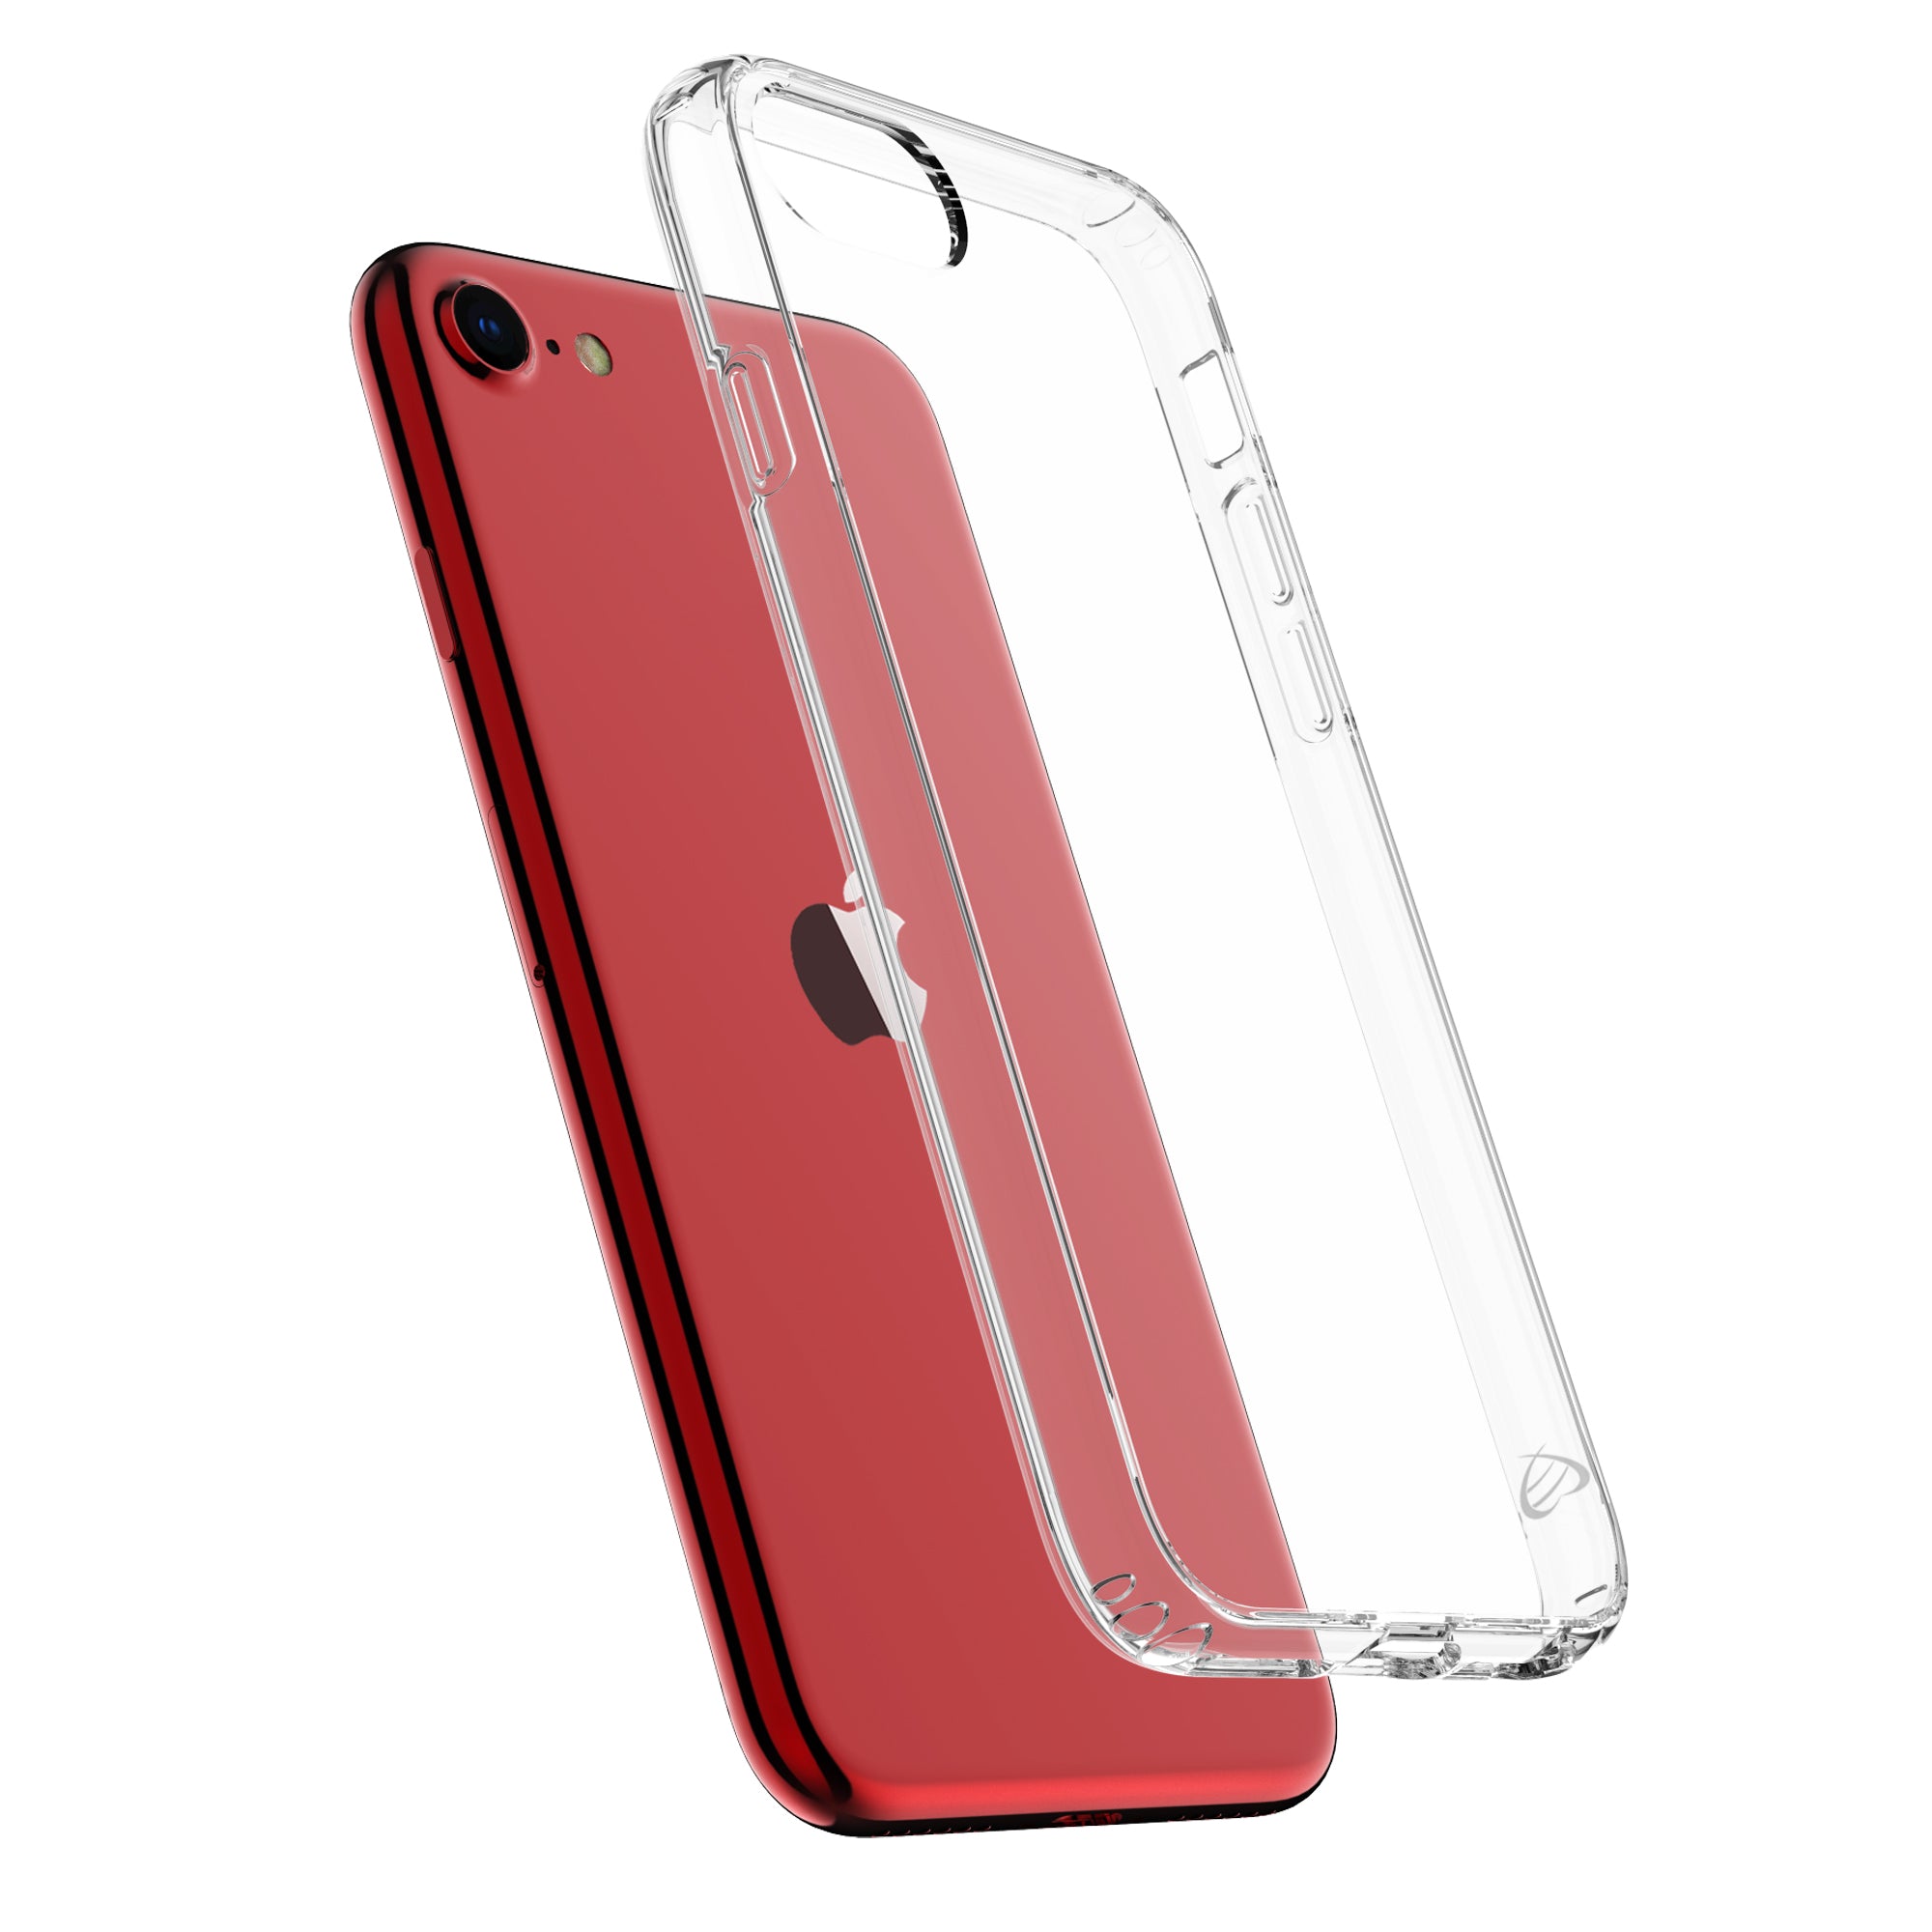 Liquid Glass Case for iPhone 8